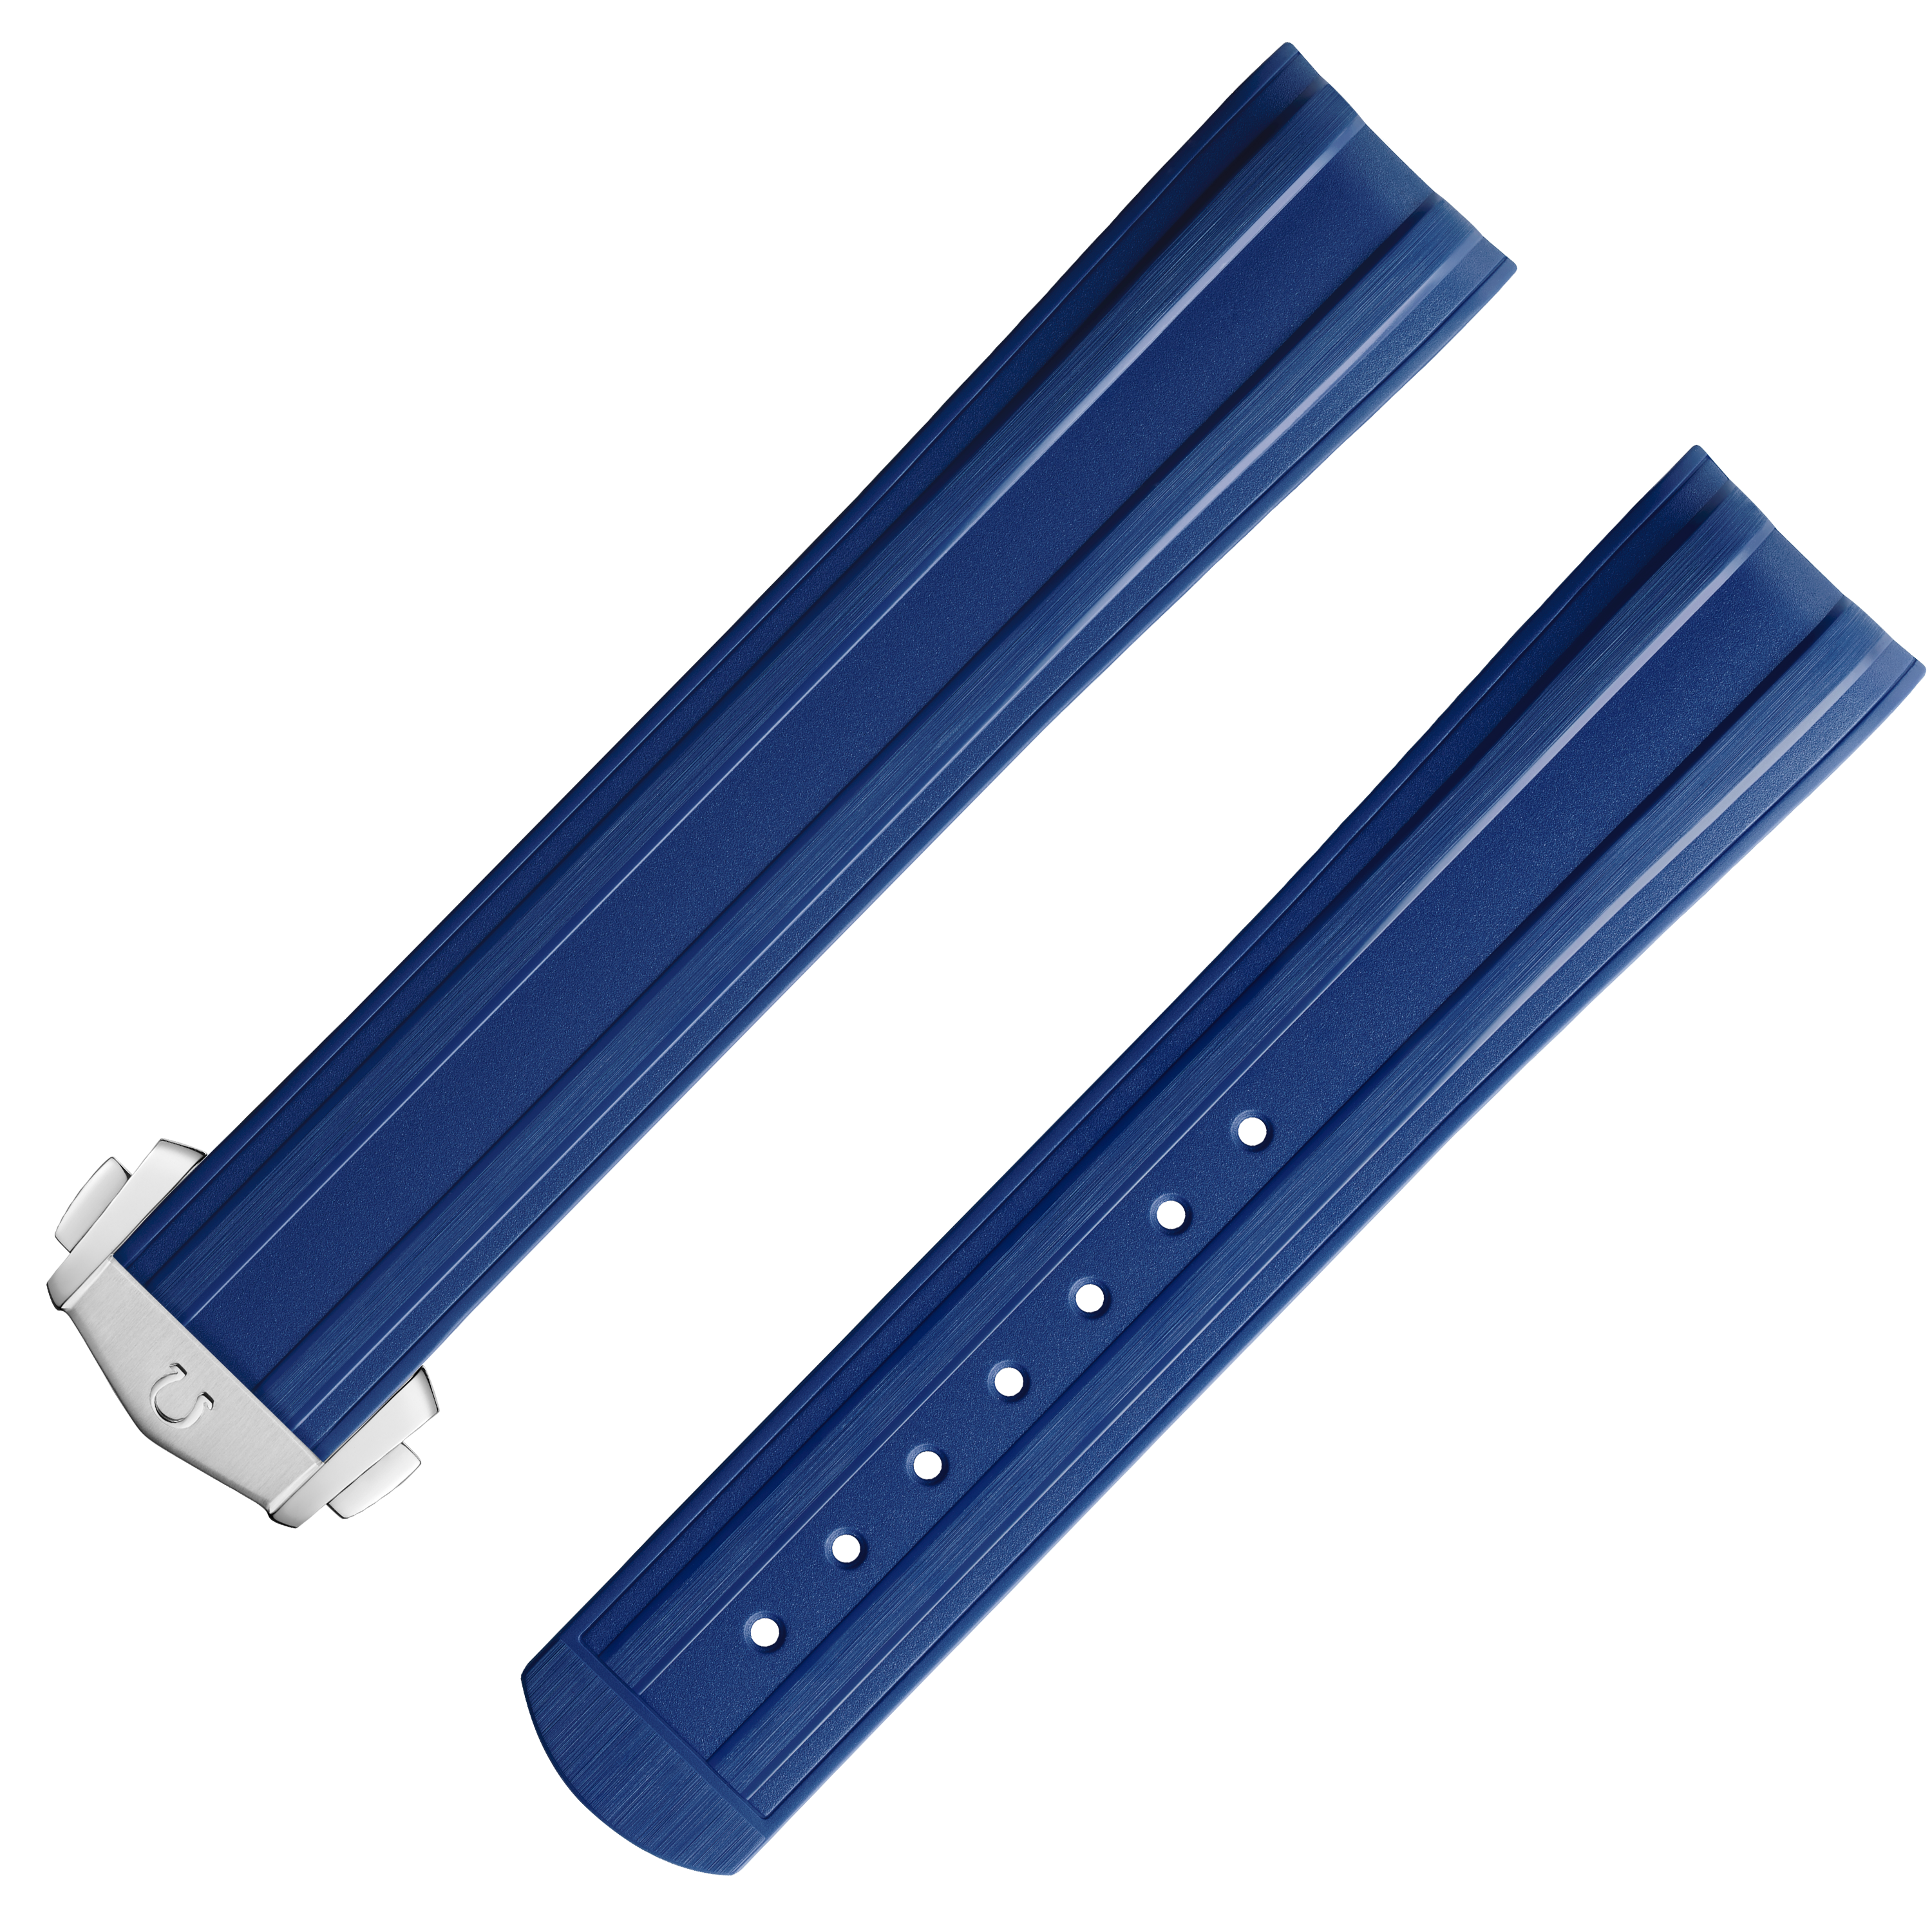 Cinturino a due pezzi - Cinturino in caucciù blu con fibbia déployante per il Seamaster Diver 300M - 032Z019019